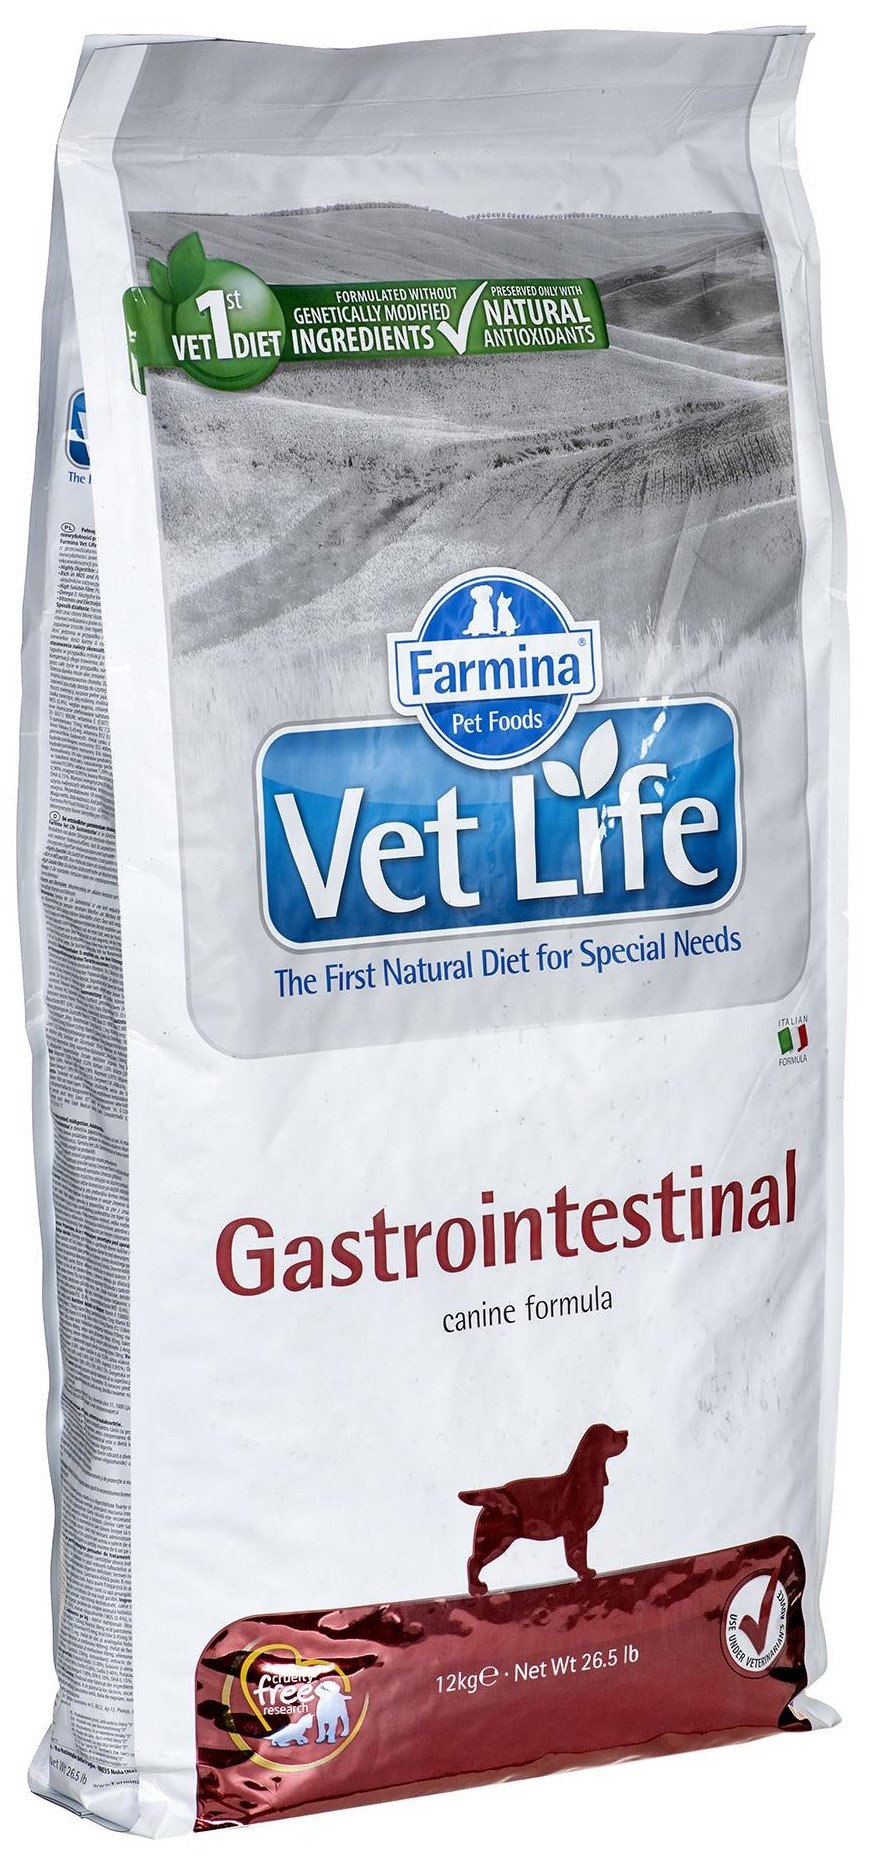 Farmina gastrointestinal для кошек. Корм для собак Фармина Gastrointestinal 12 кг. Vet Life Gastrointestinal корм для собак. Фармина гастро Интестинал для собак. Vet Life корм для собак Gastro intestinal.